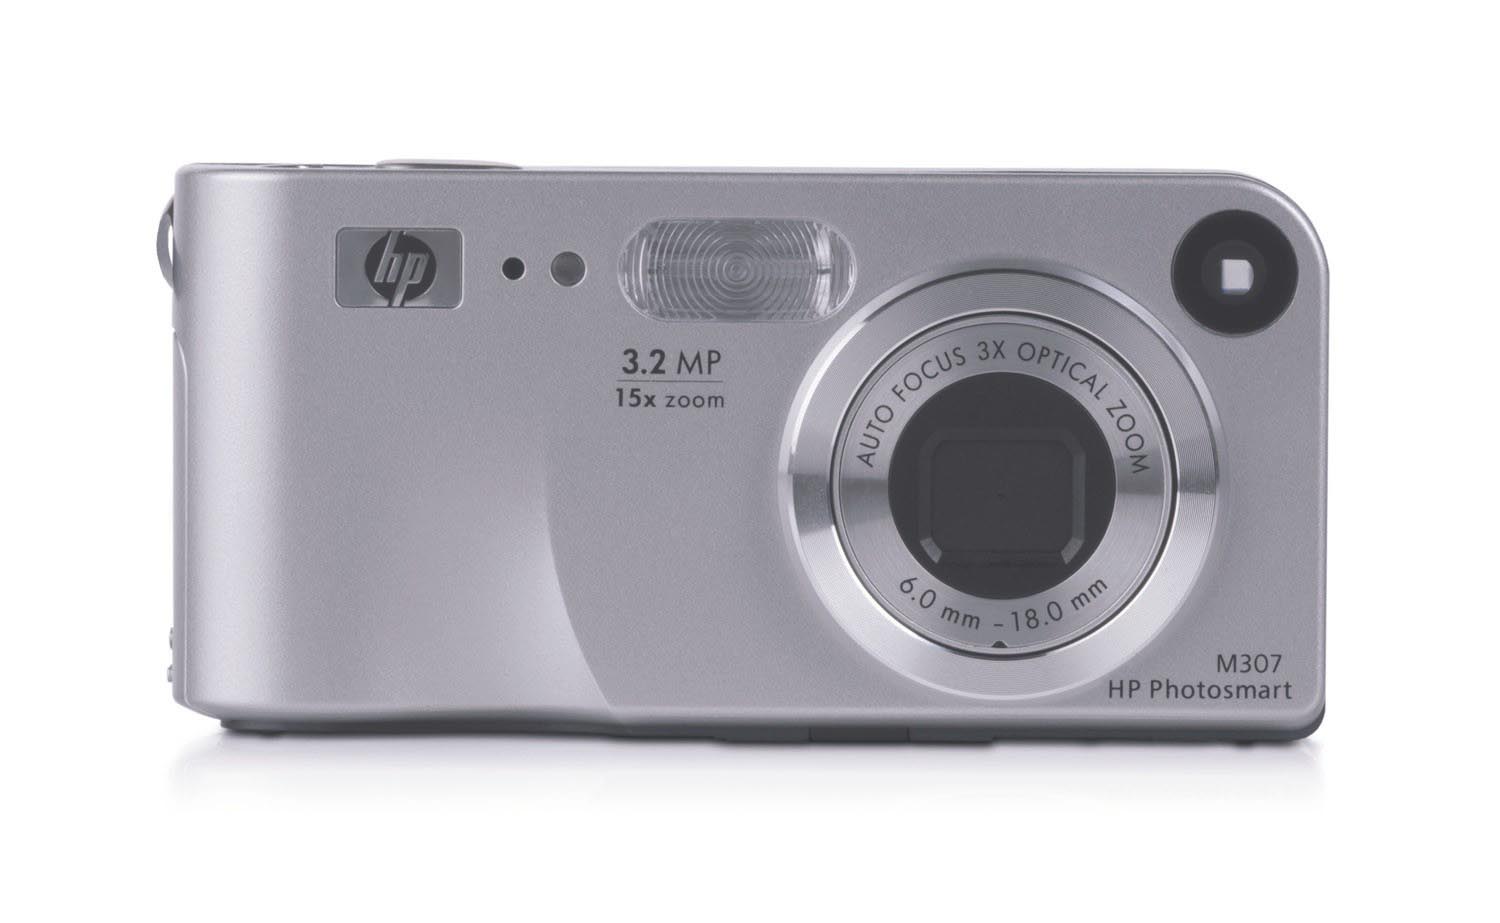 HP PhotoSmart M307 Digital Camera